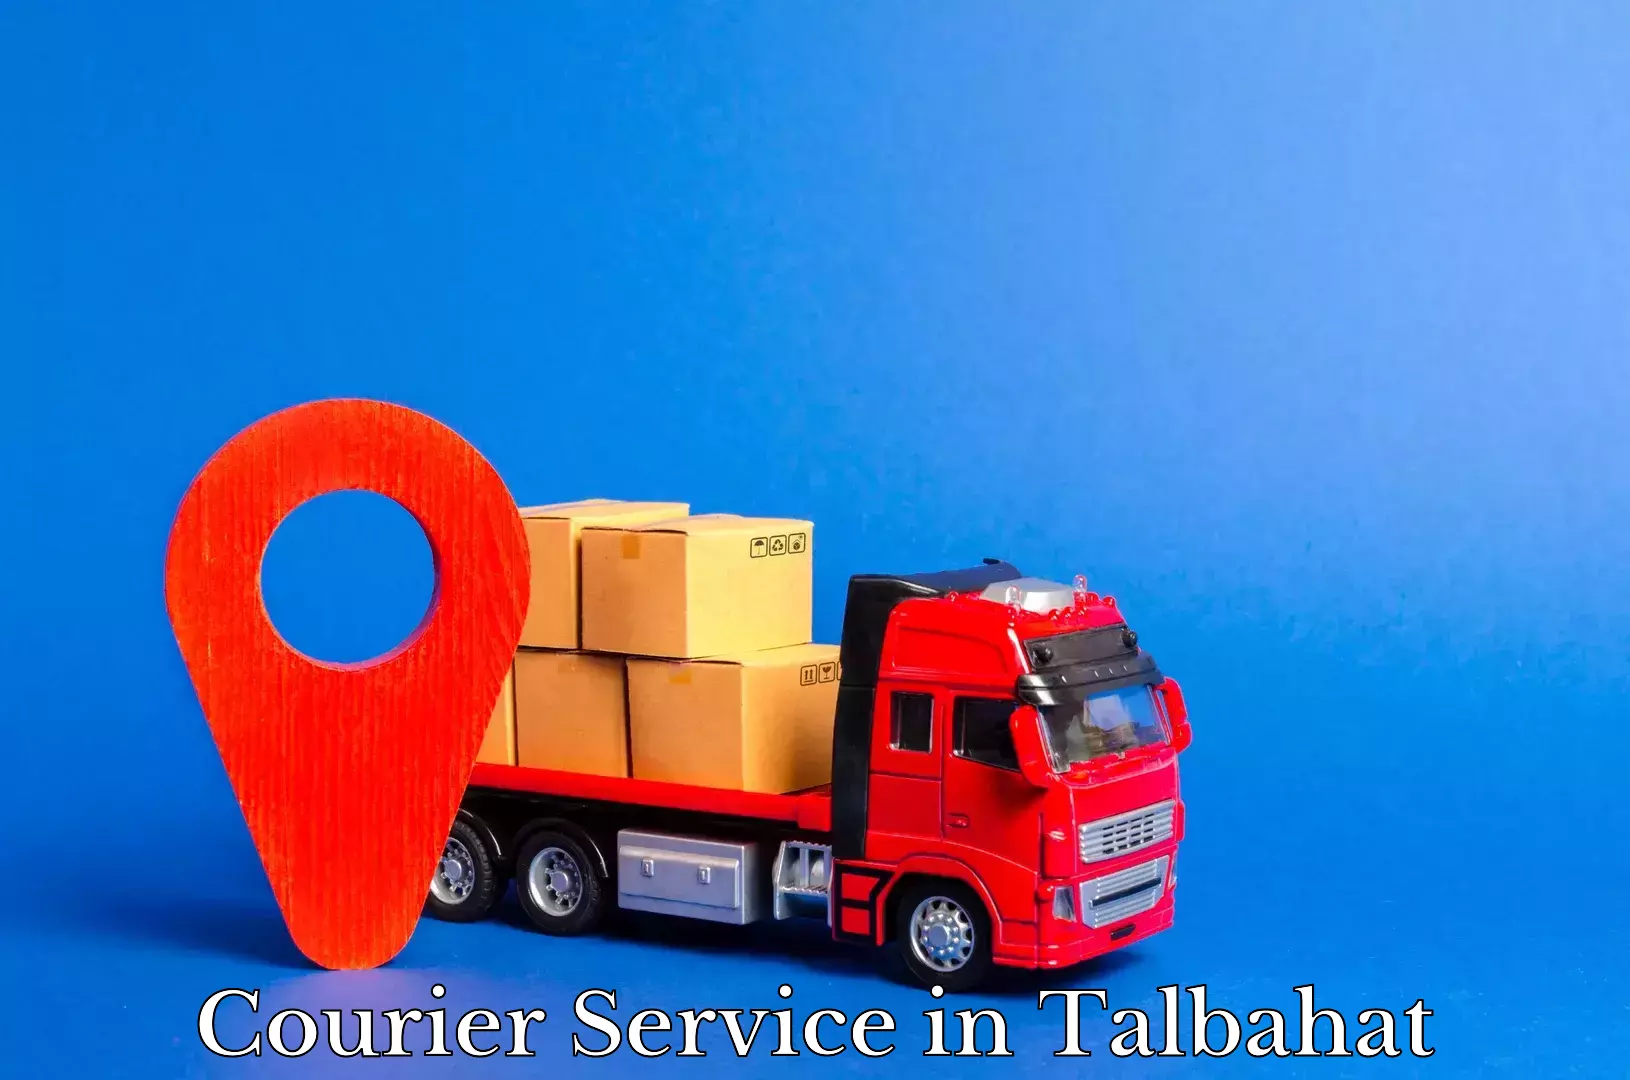 Cross-border shipping in Talbahat